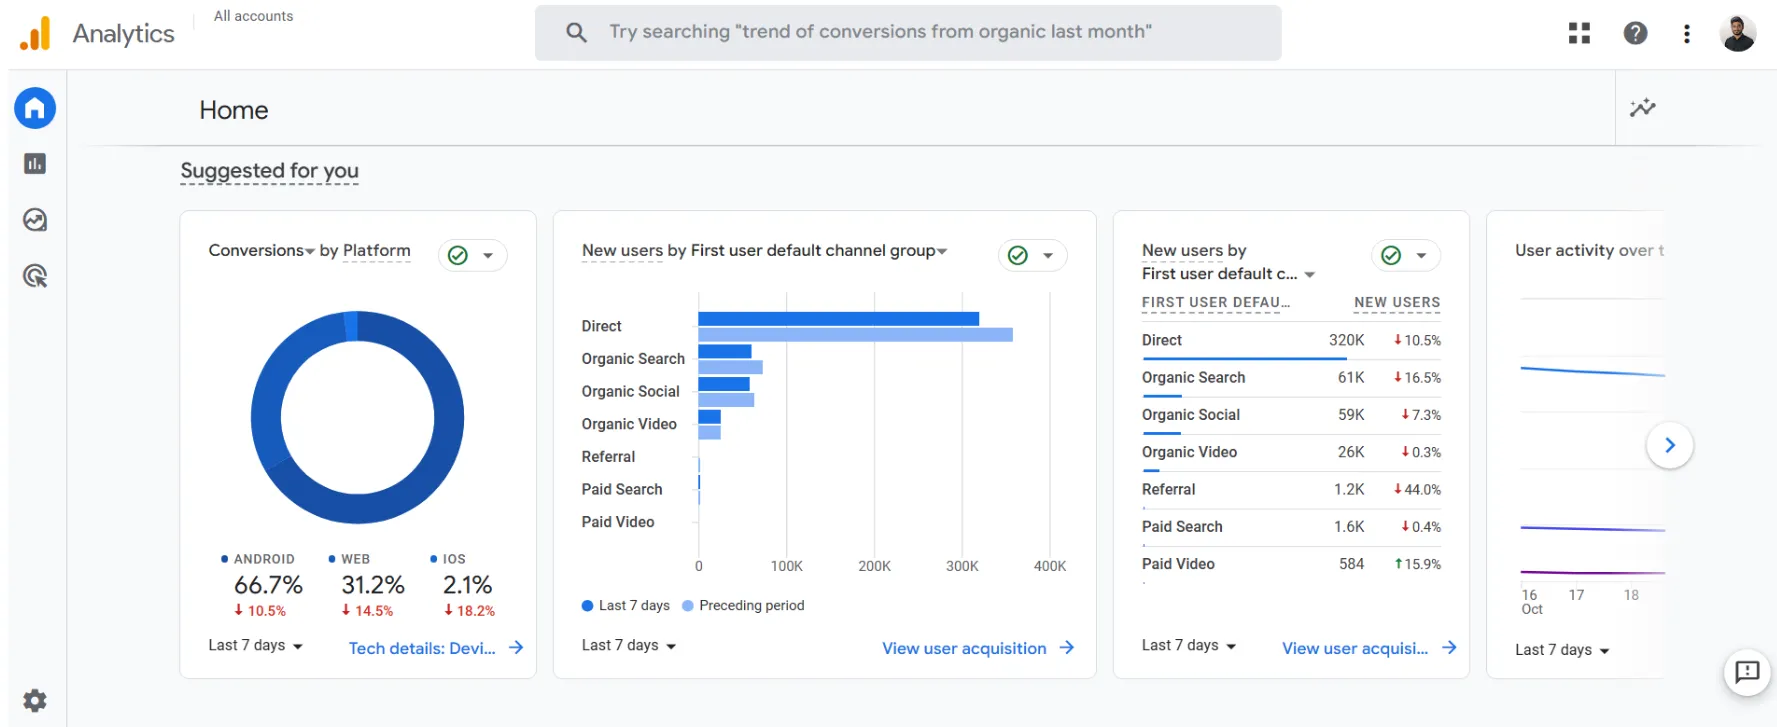 Google Analytics 4 interface